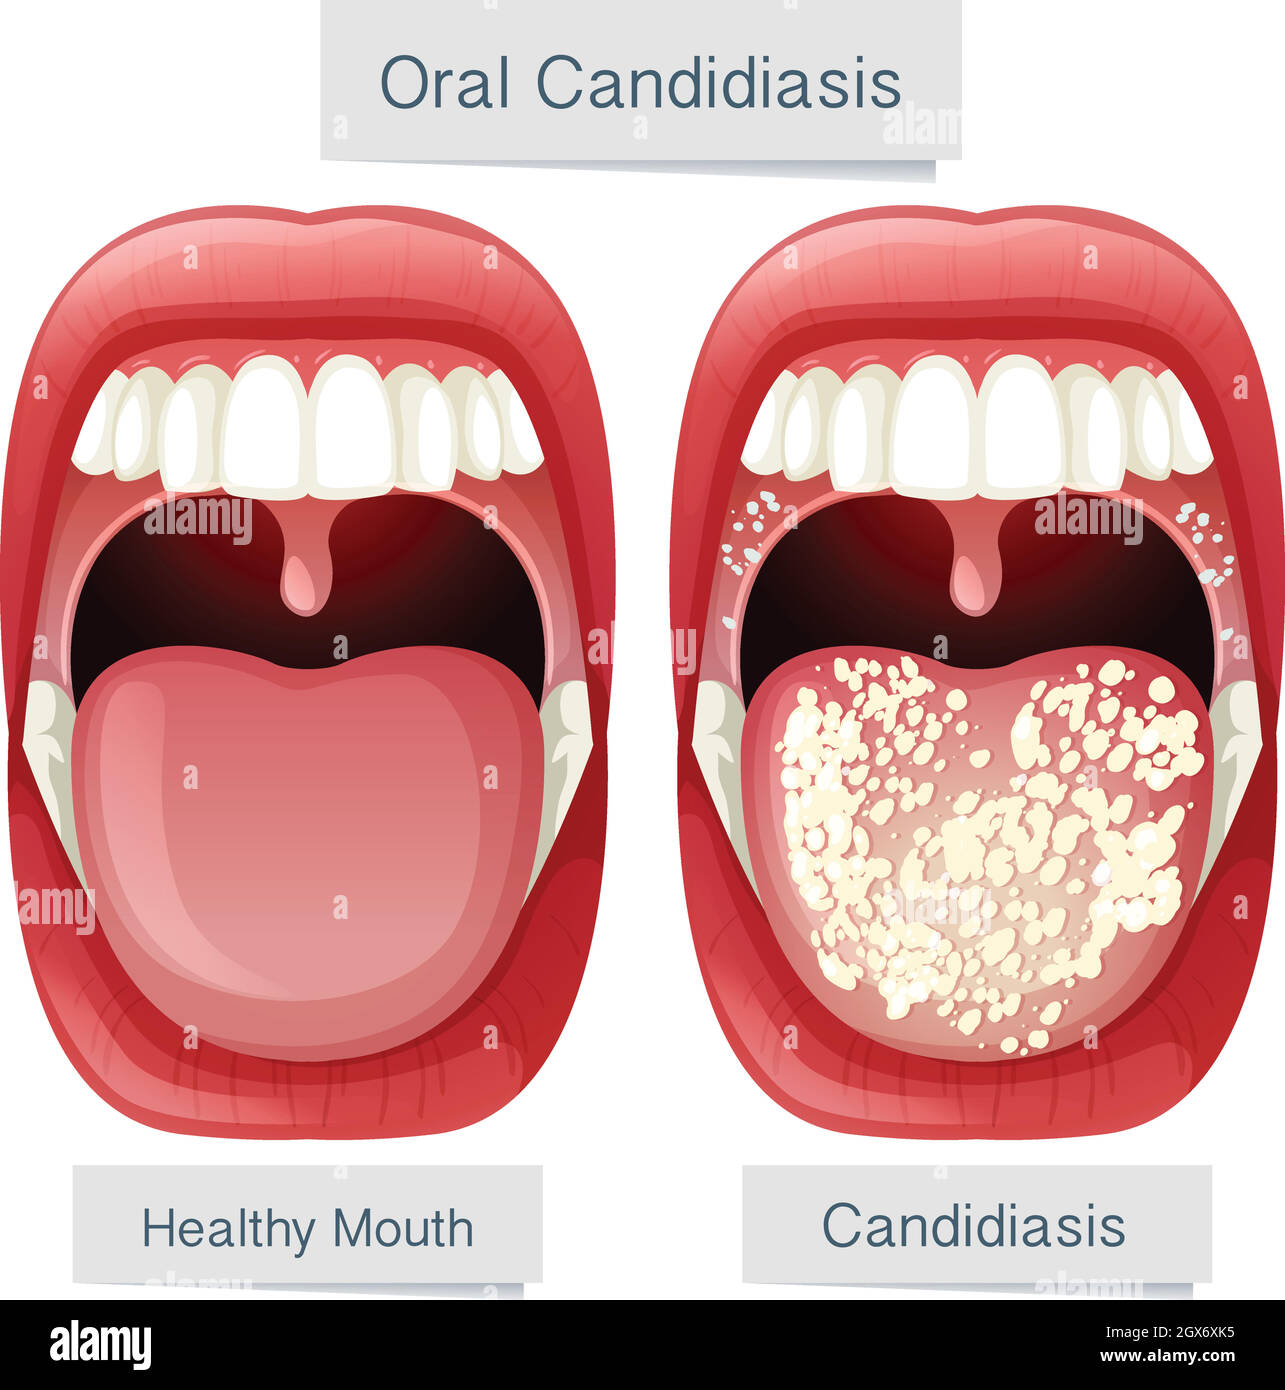 Human Mouth Anatomy Oral Candidiasis Stock Vector